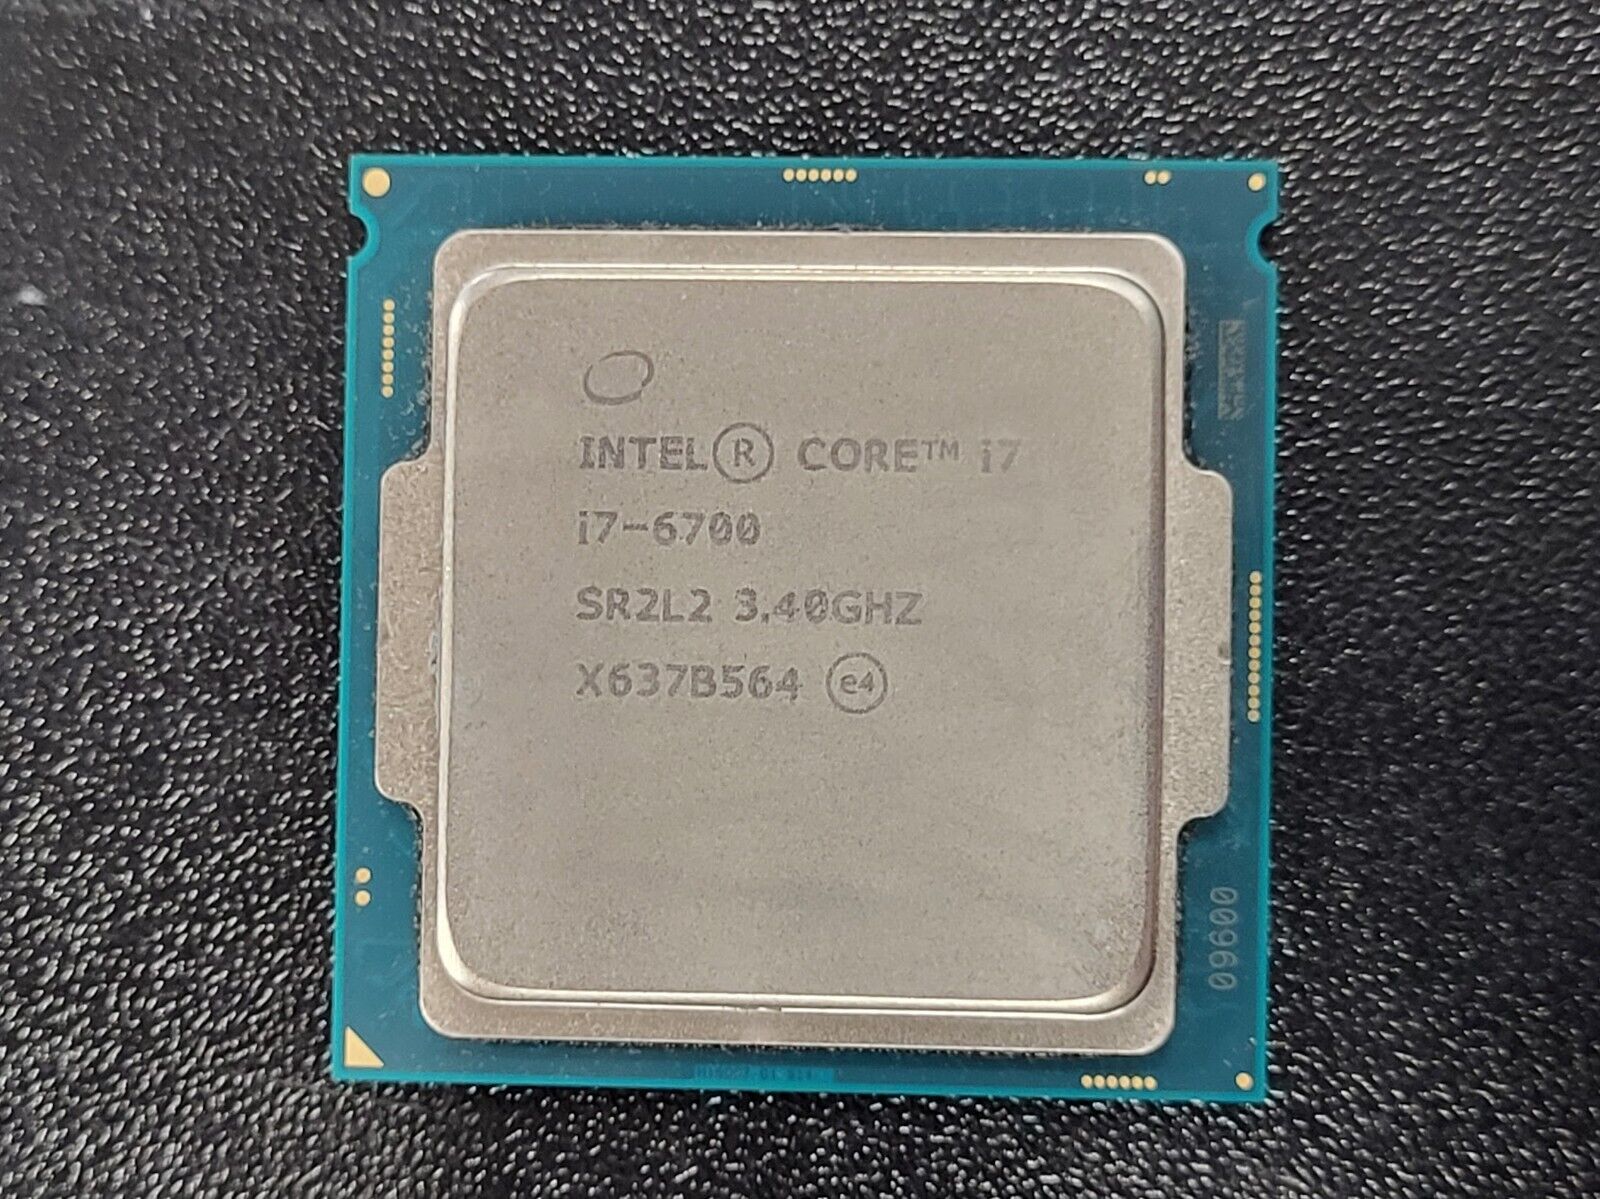 Intel Core i7-6700 3.4 GHz CPU Processor (SR2L2) #73